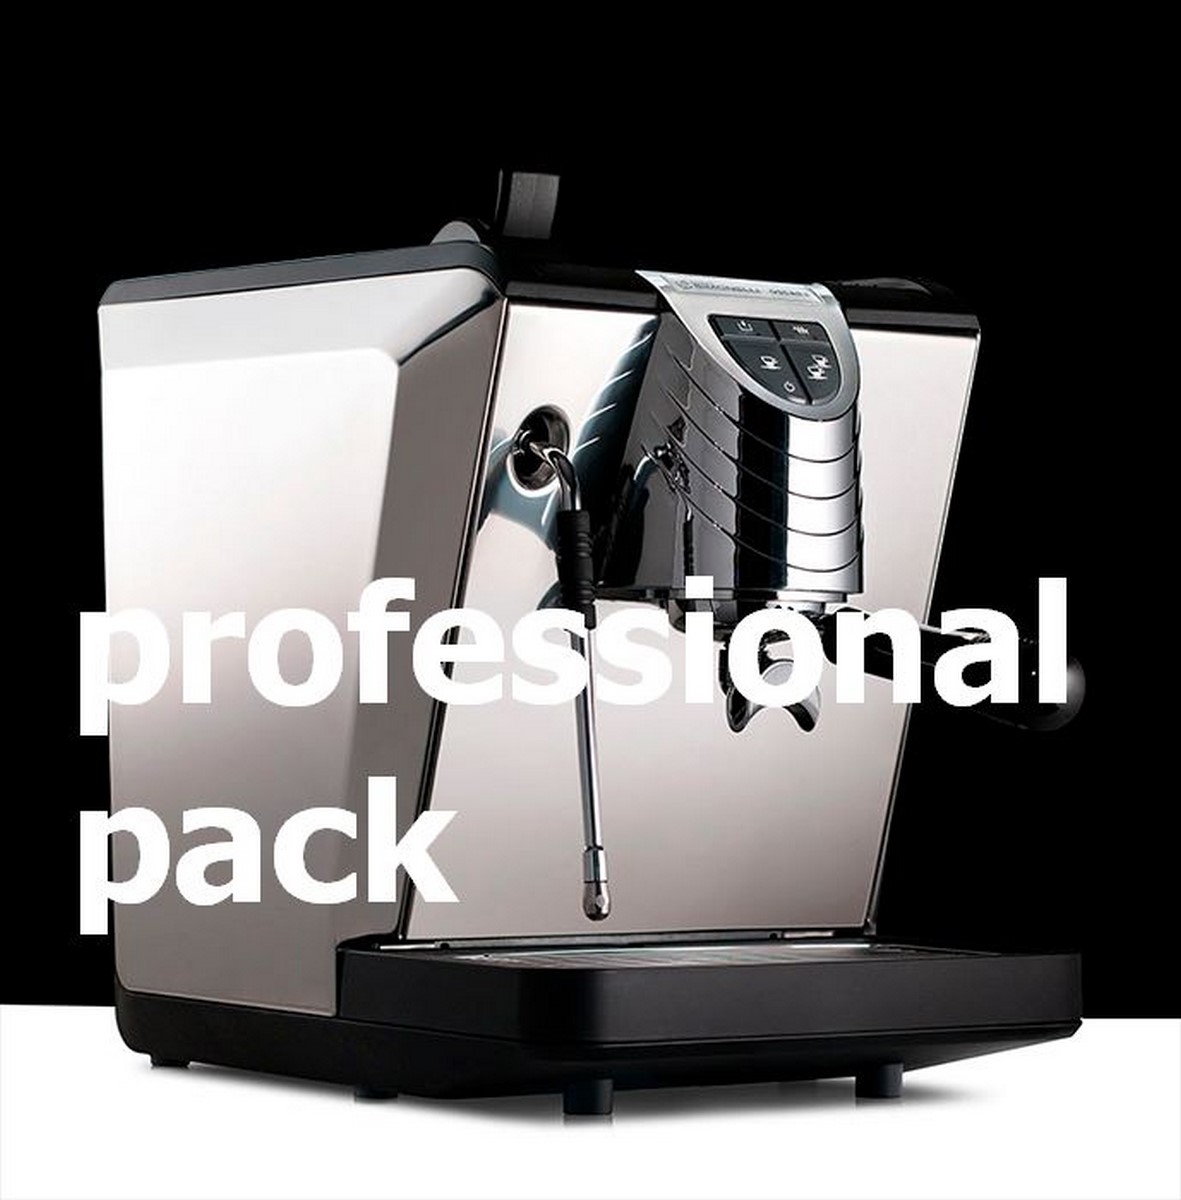 Oscar 22 PROFESSIONAL PACK NOIR Nuoveau Version Machine à Café NUOVA SIMONELLI 